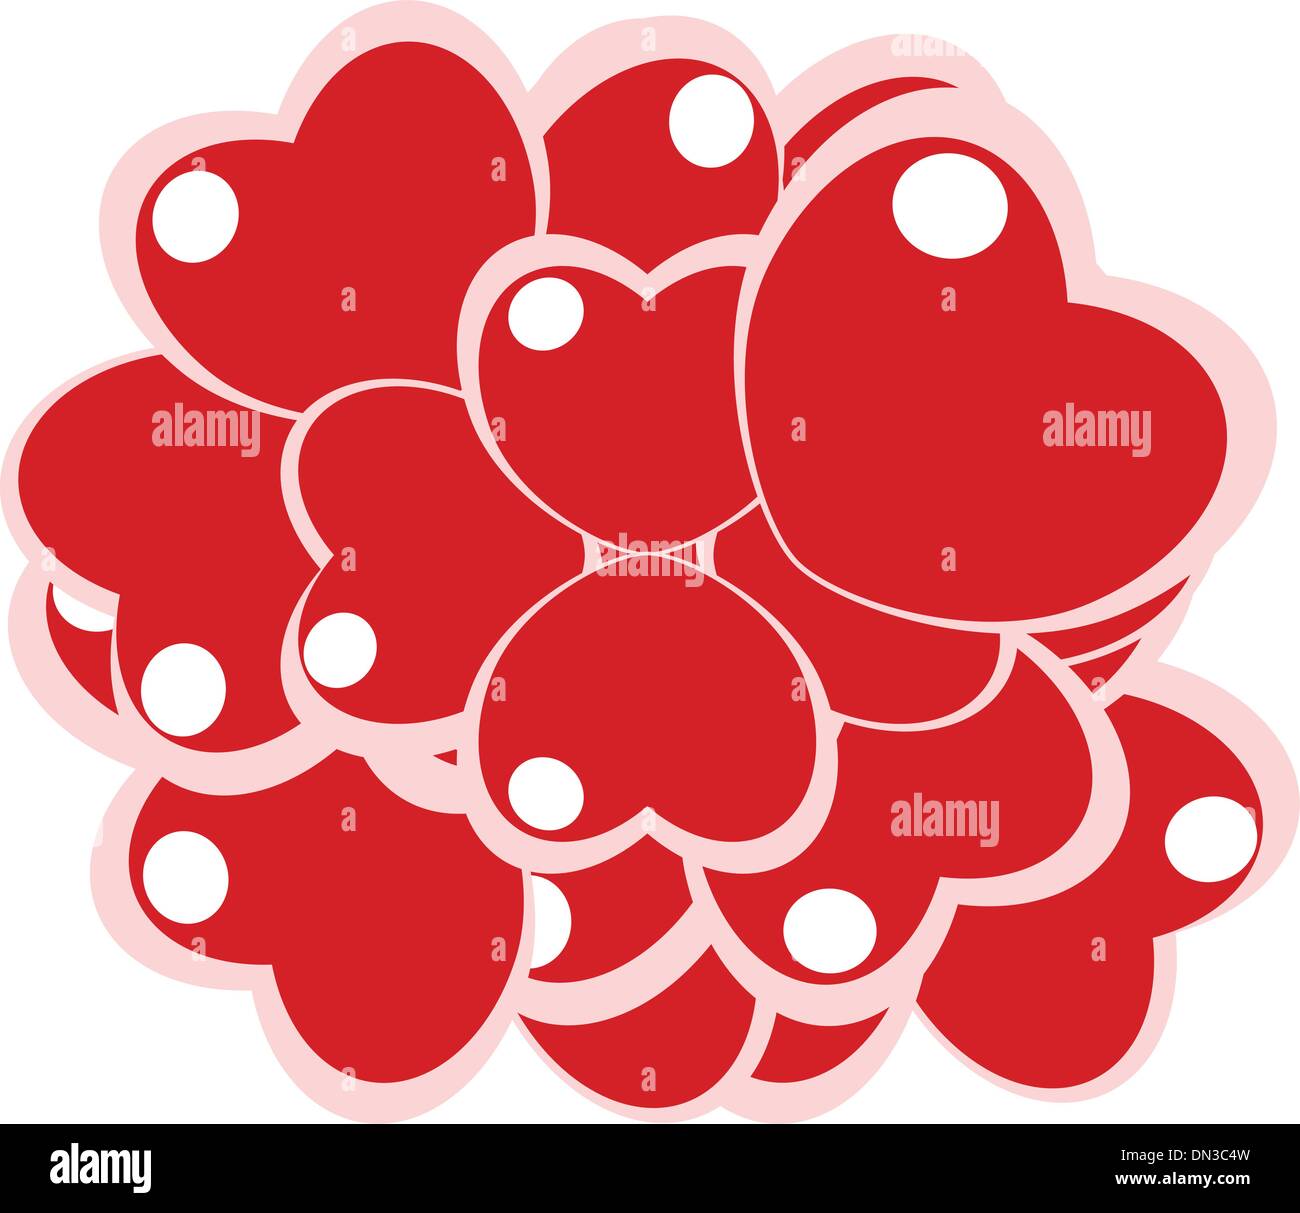 Red heart illustration Stock Vector